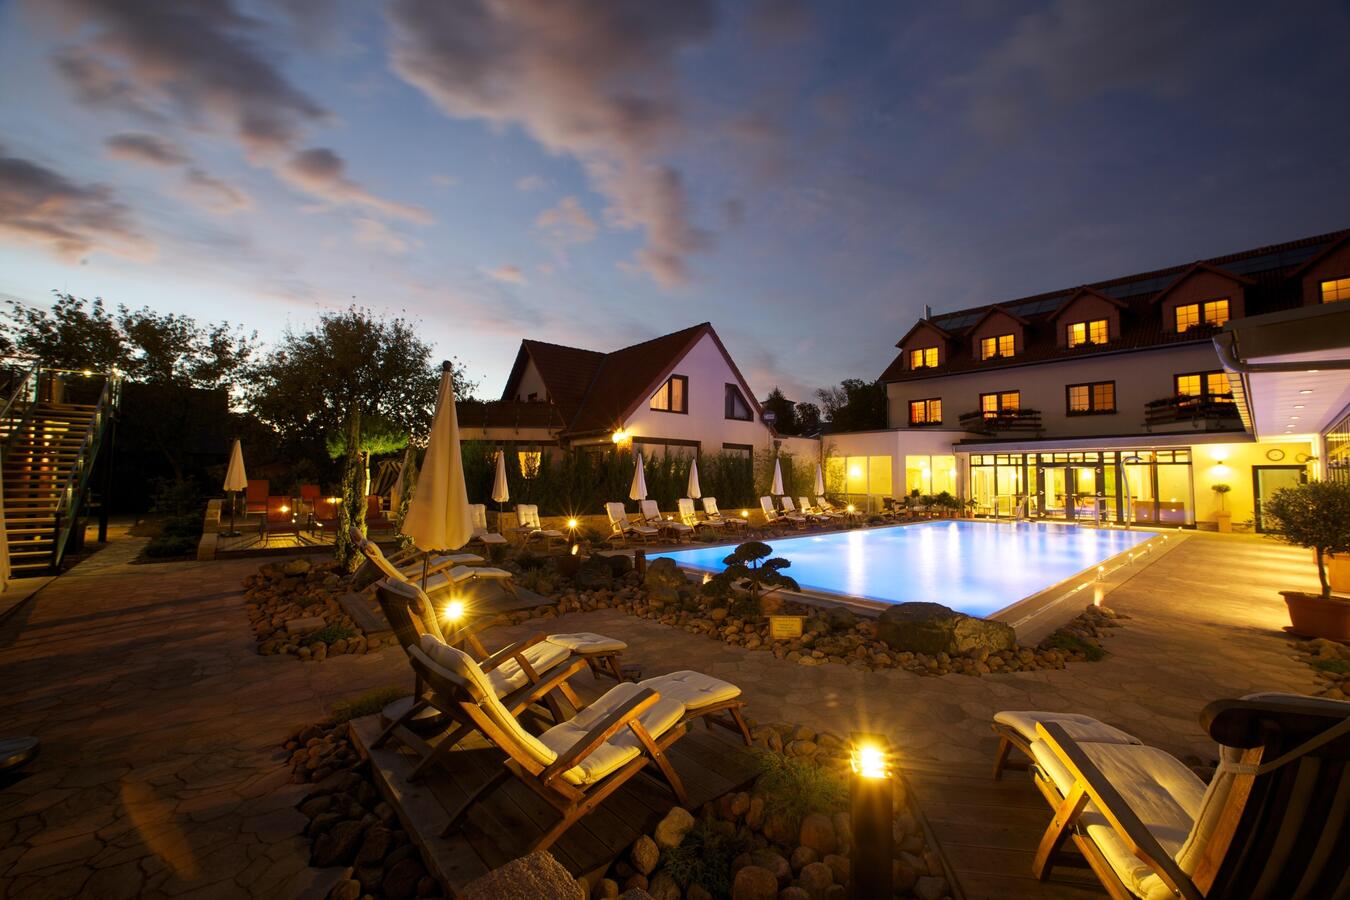 Heated outdoor swimming pool at the 4-star hotel Ringhotel Zum Stein in Woerlitz